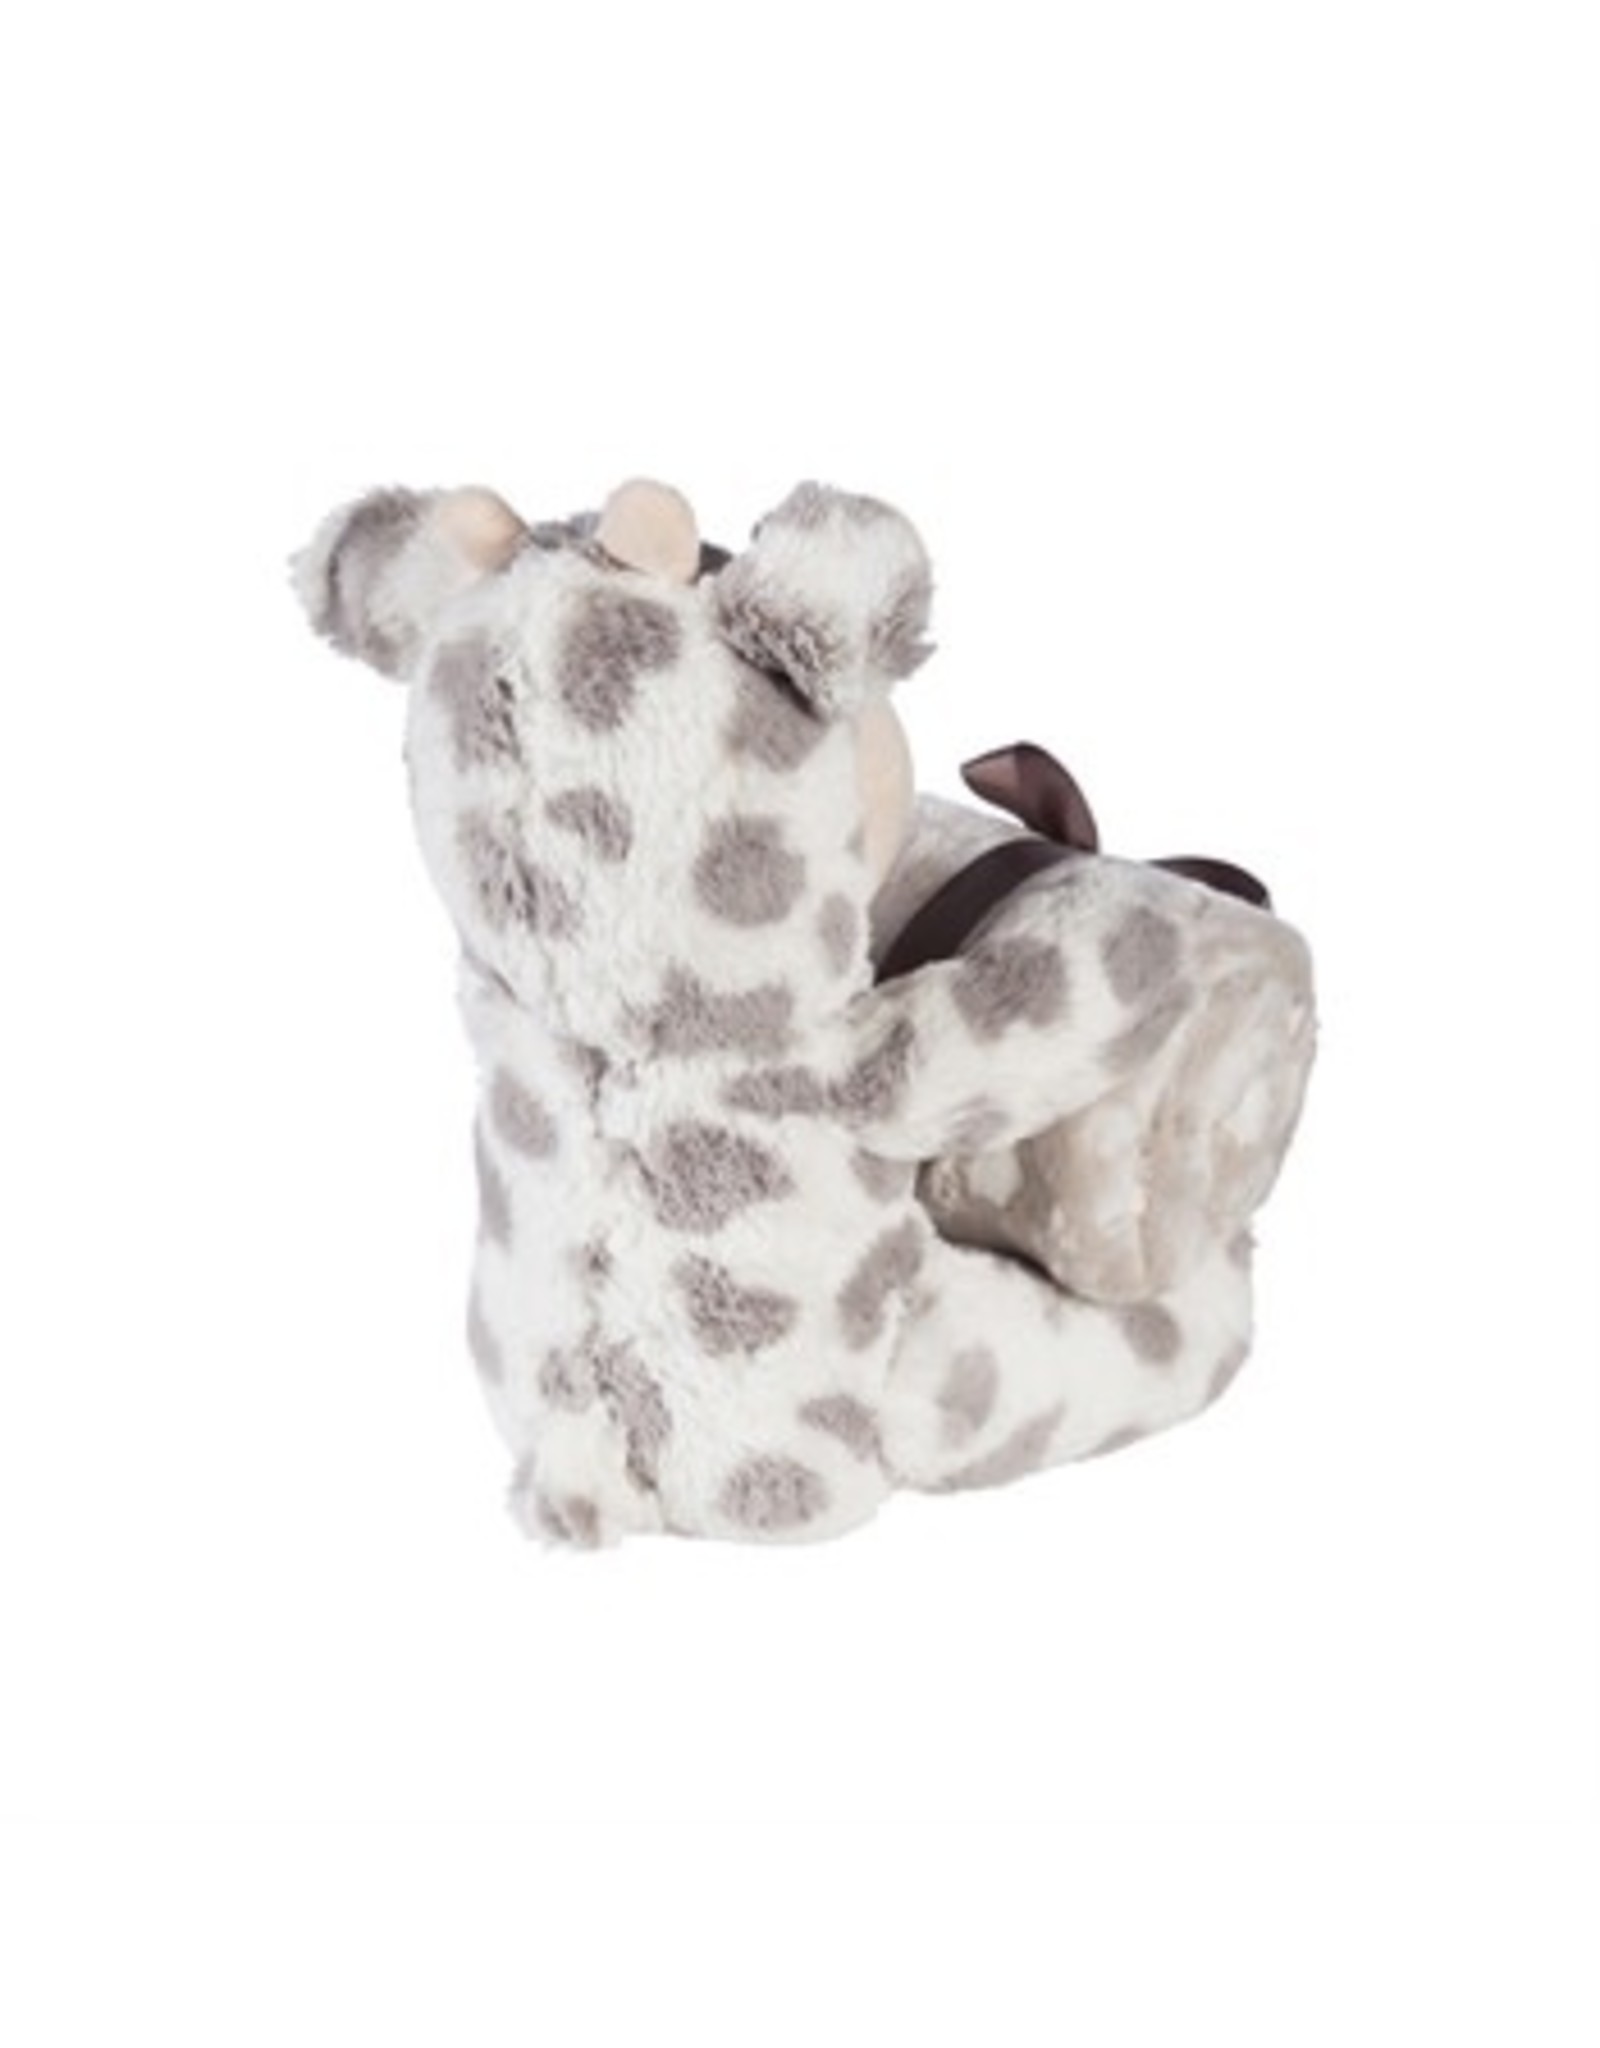 Evergreen Enterprises Cuddly Giraffe 10"  Stuffed Animal w/Blanket, Gray